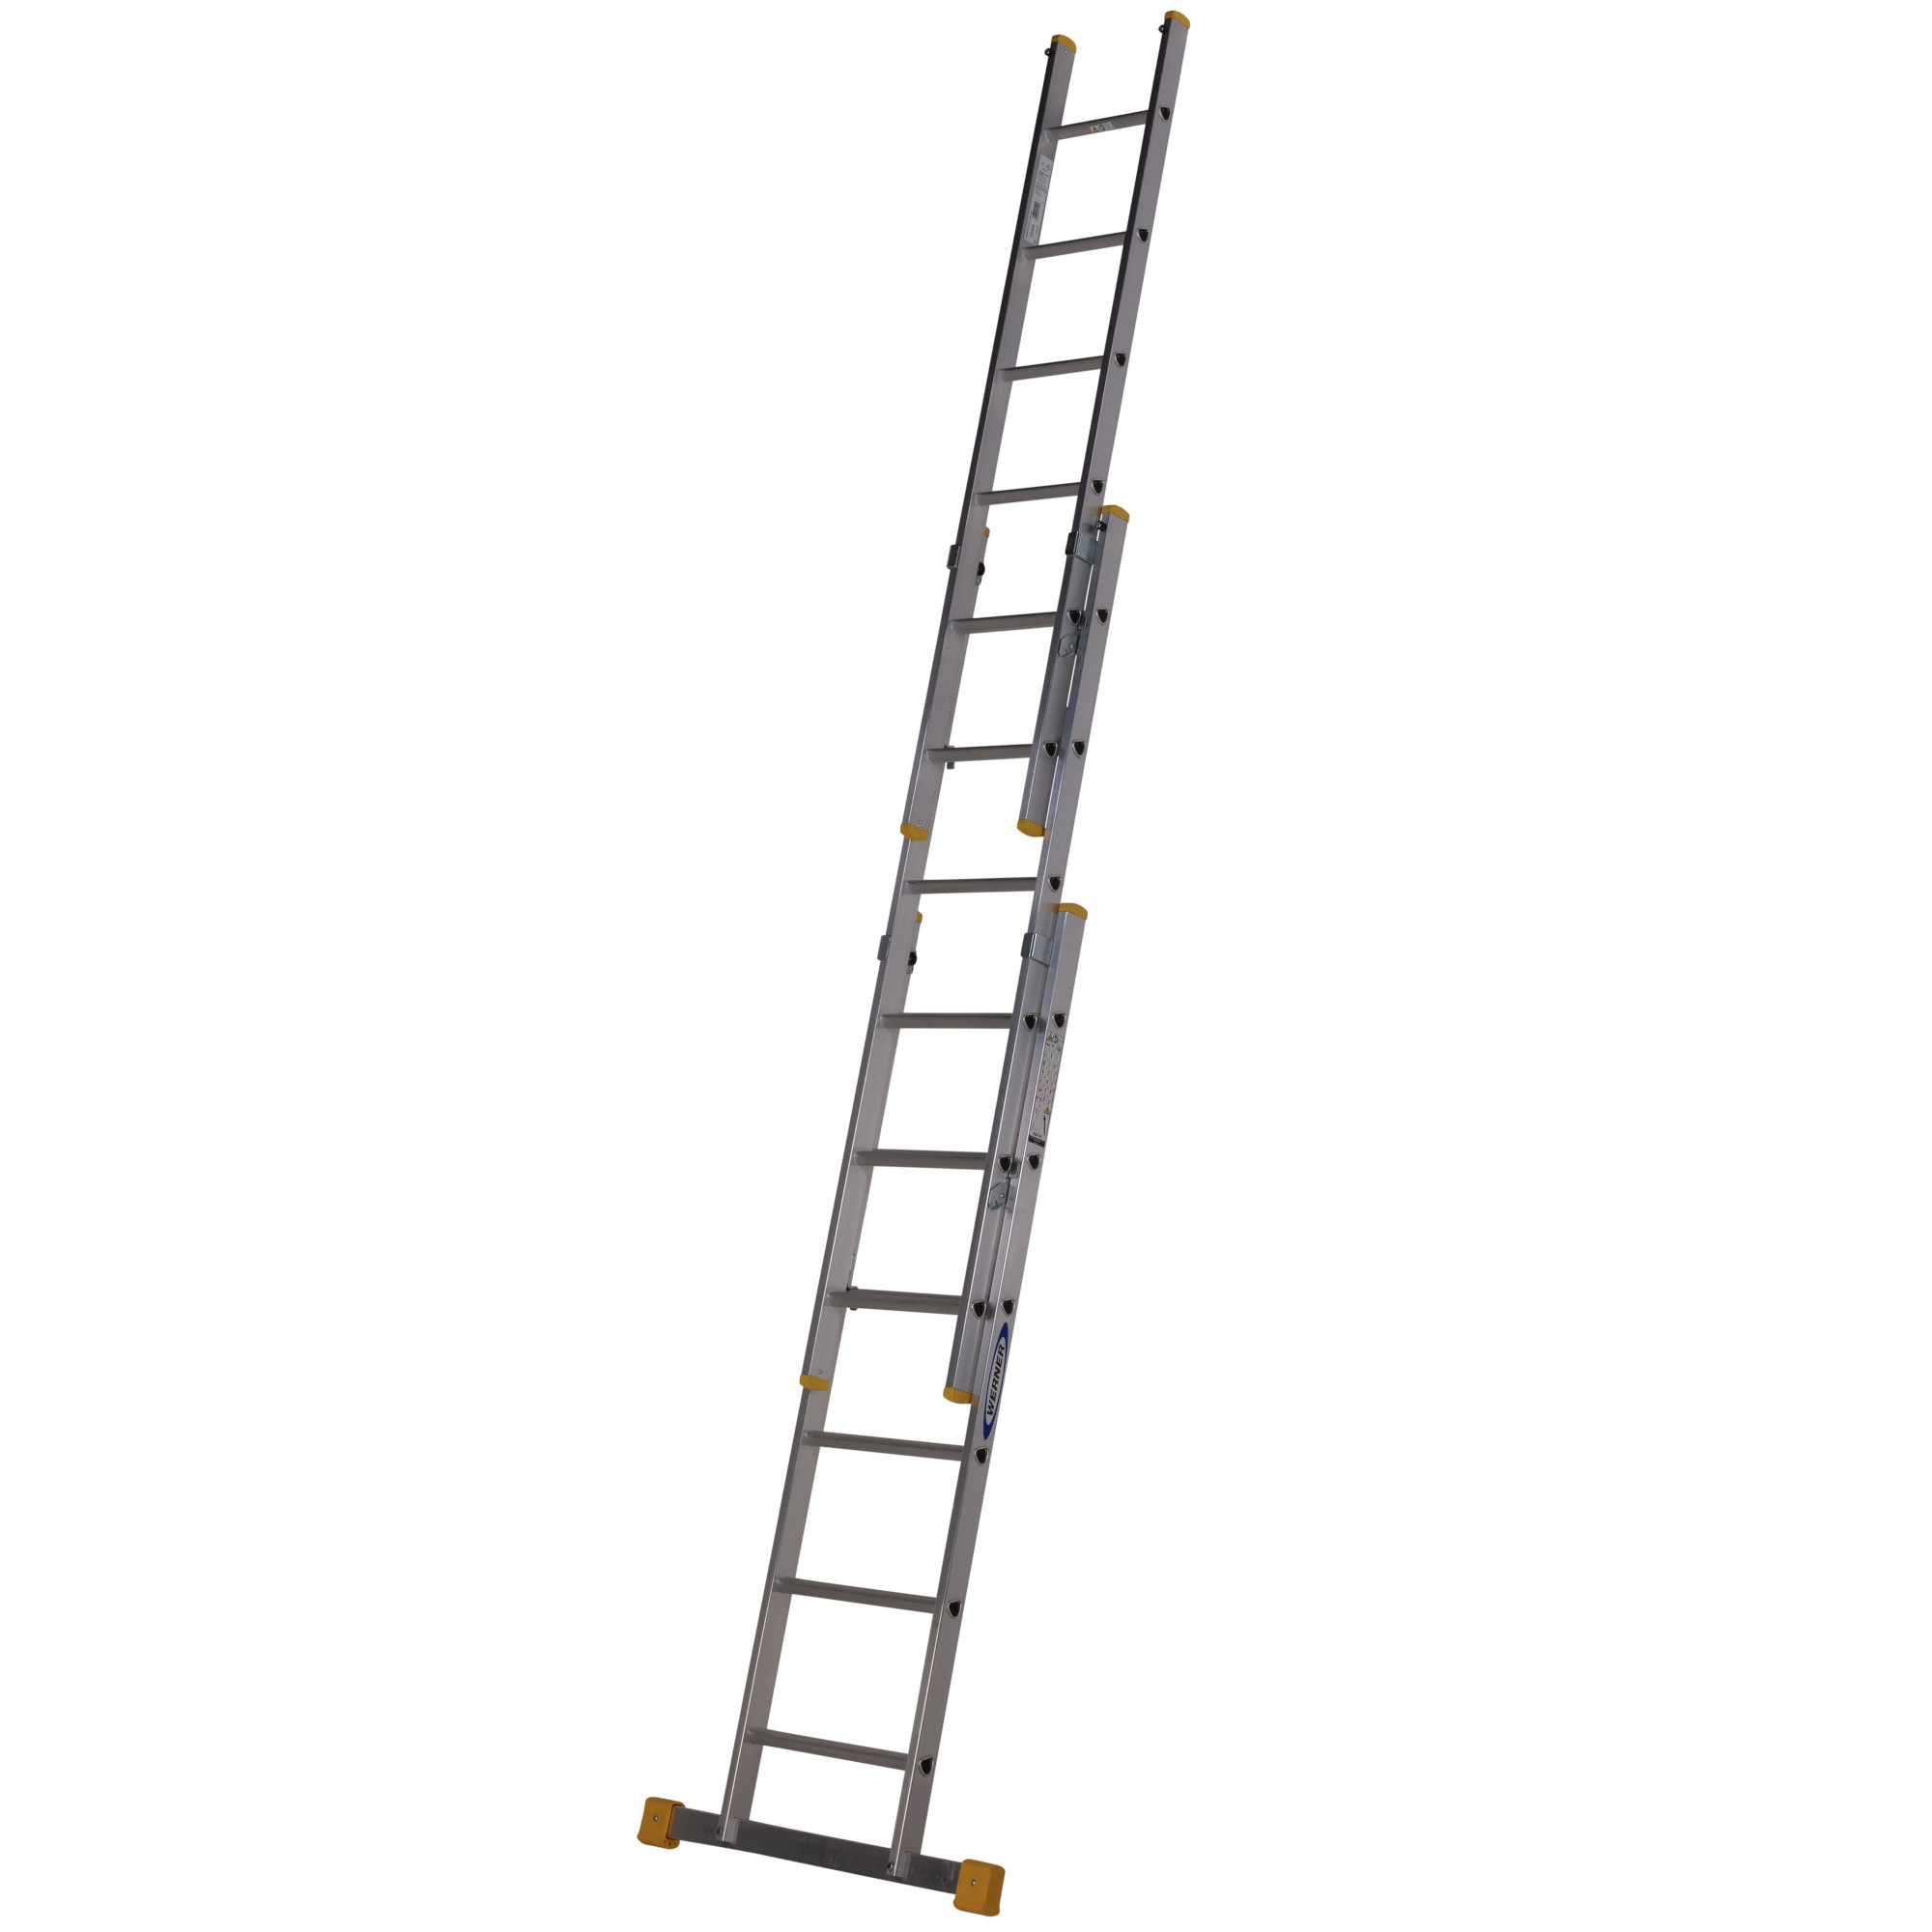 Werner D Rung Triple Extension Ladder laddersandmore.co.uk